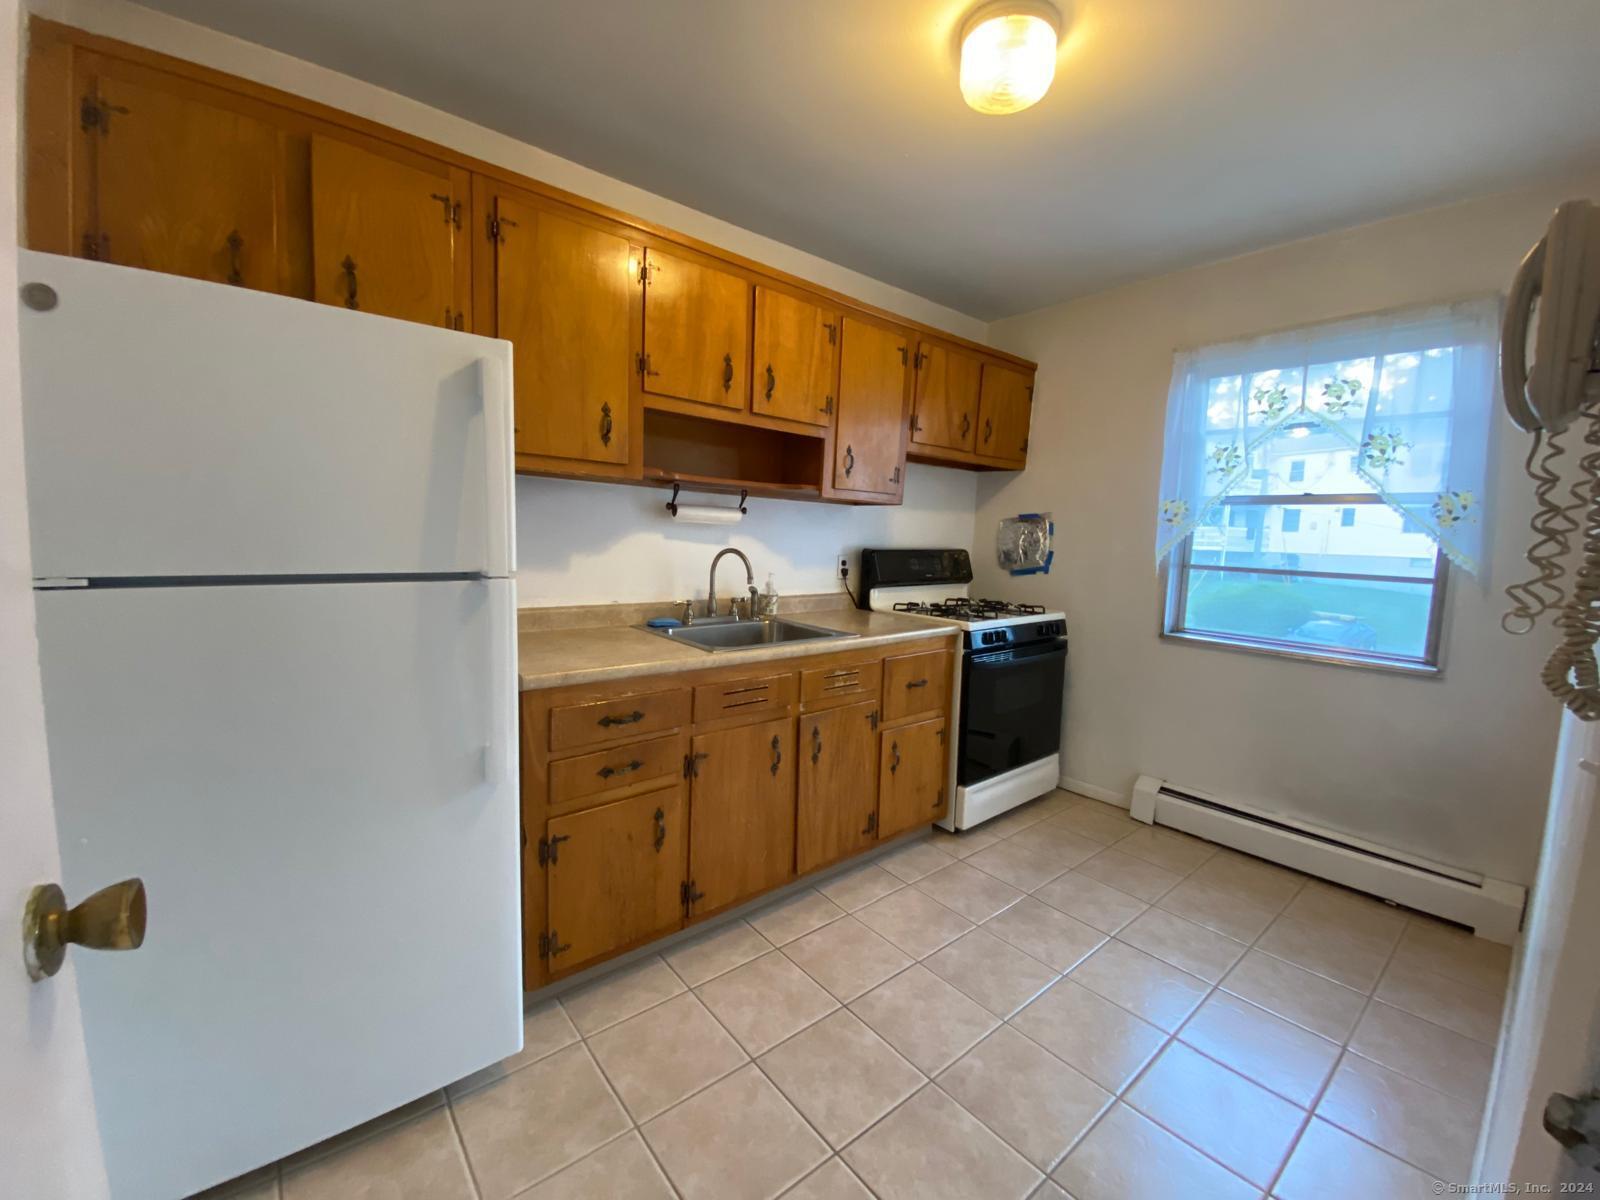 Rental Property at 18 Fairview Drive Apt 3, Danbury, Connecticut - Bedrooms: 2 
Bathrooms: 1 
Rooms: 6  - $2,100 MO.